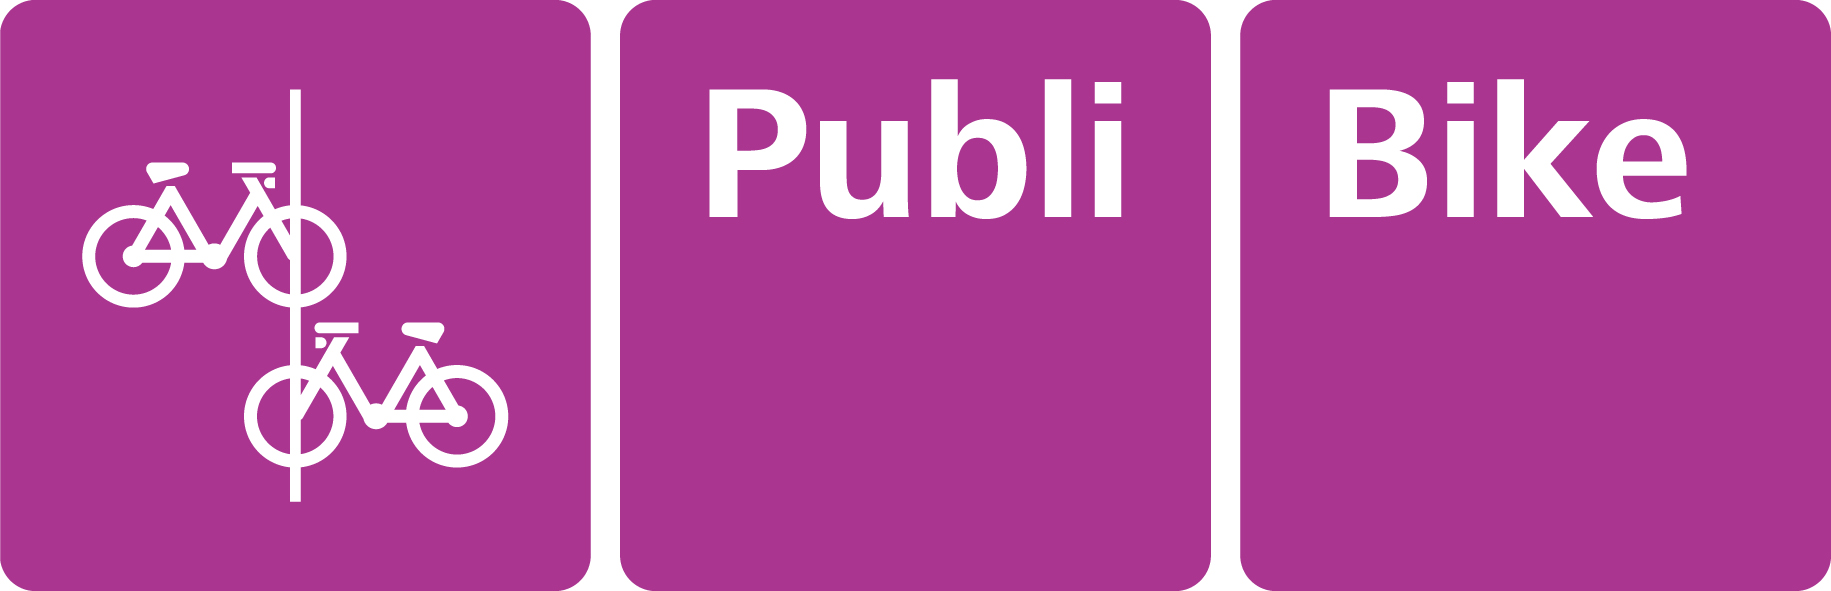 PubliBike_Logo_CMYK copie